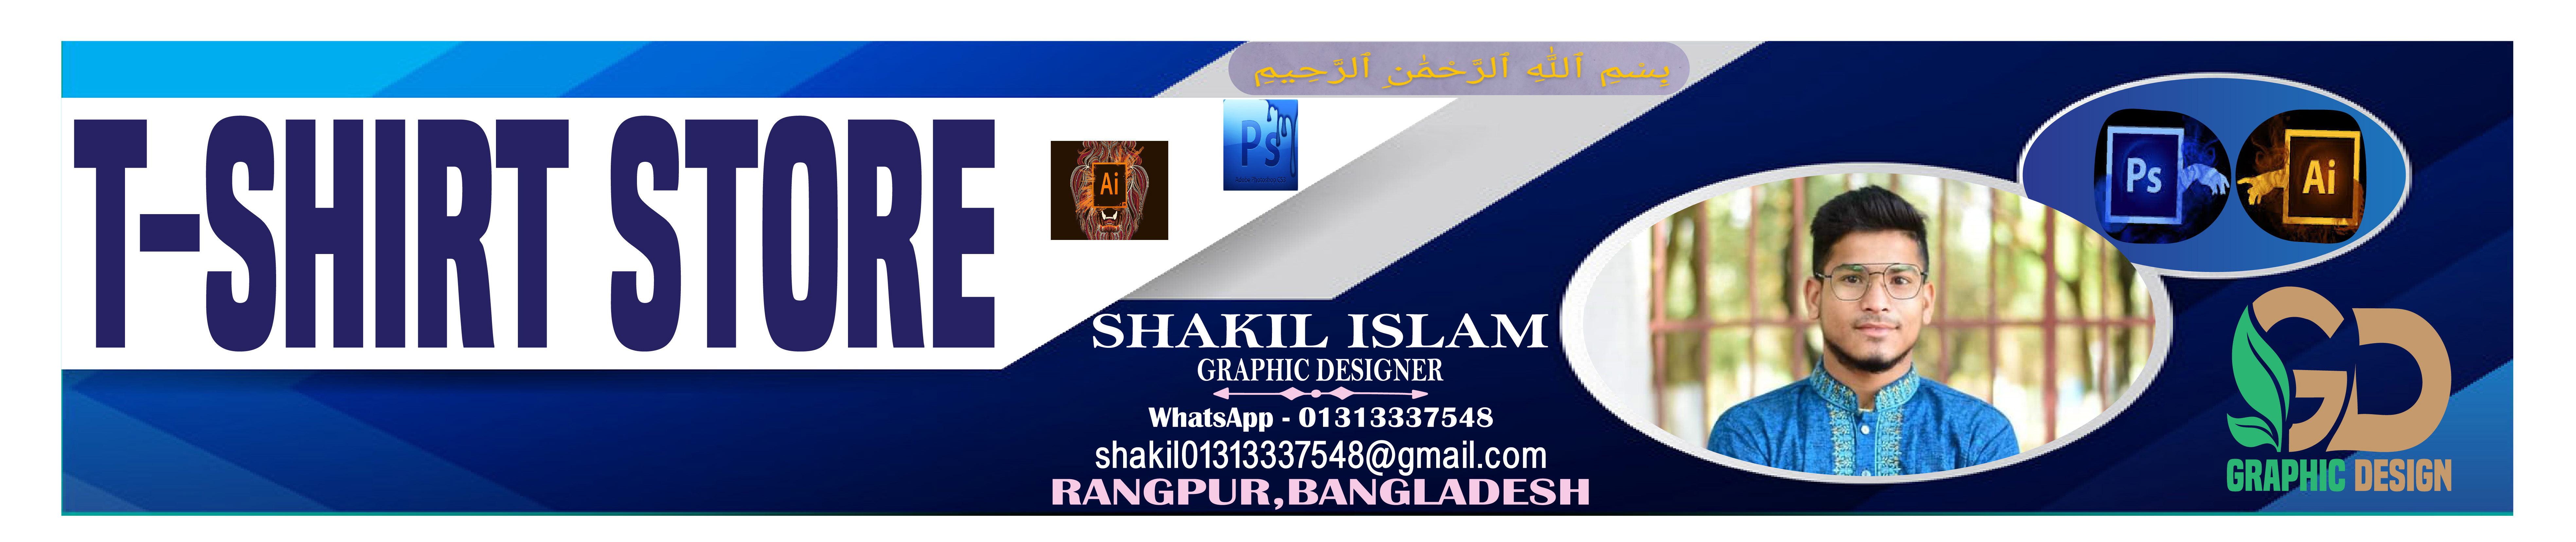 SHAKIL ISLAM's profile banner